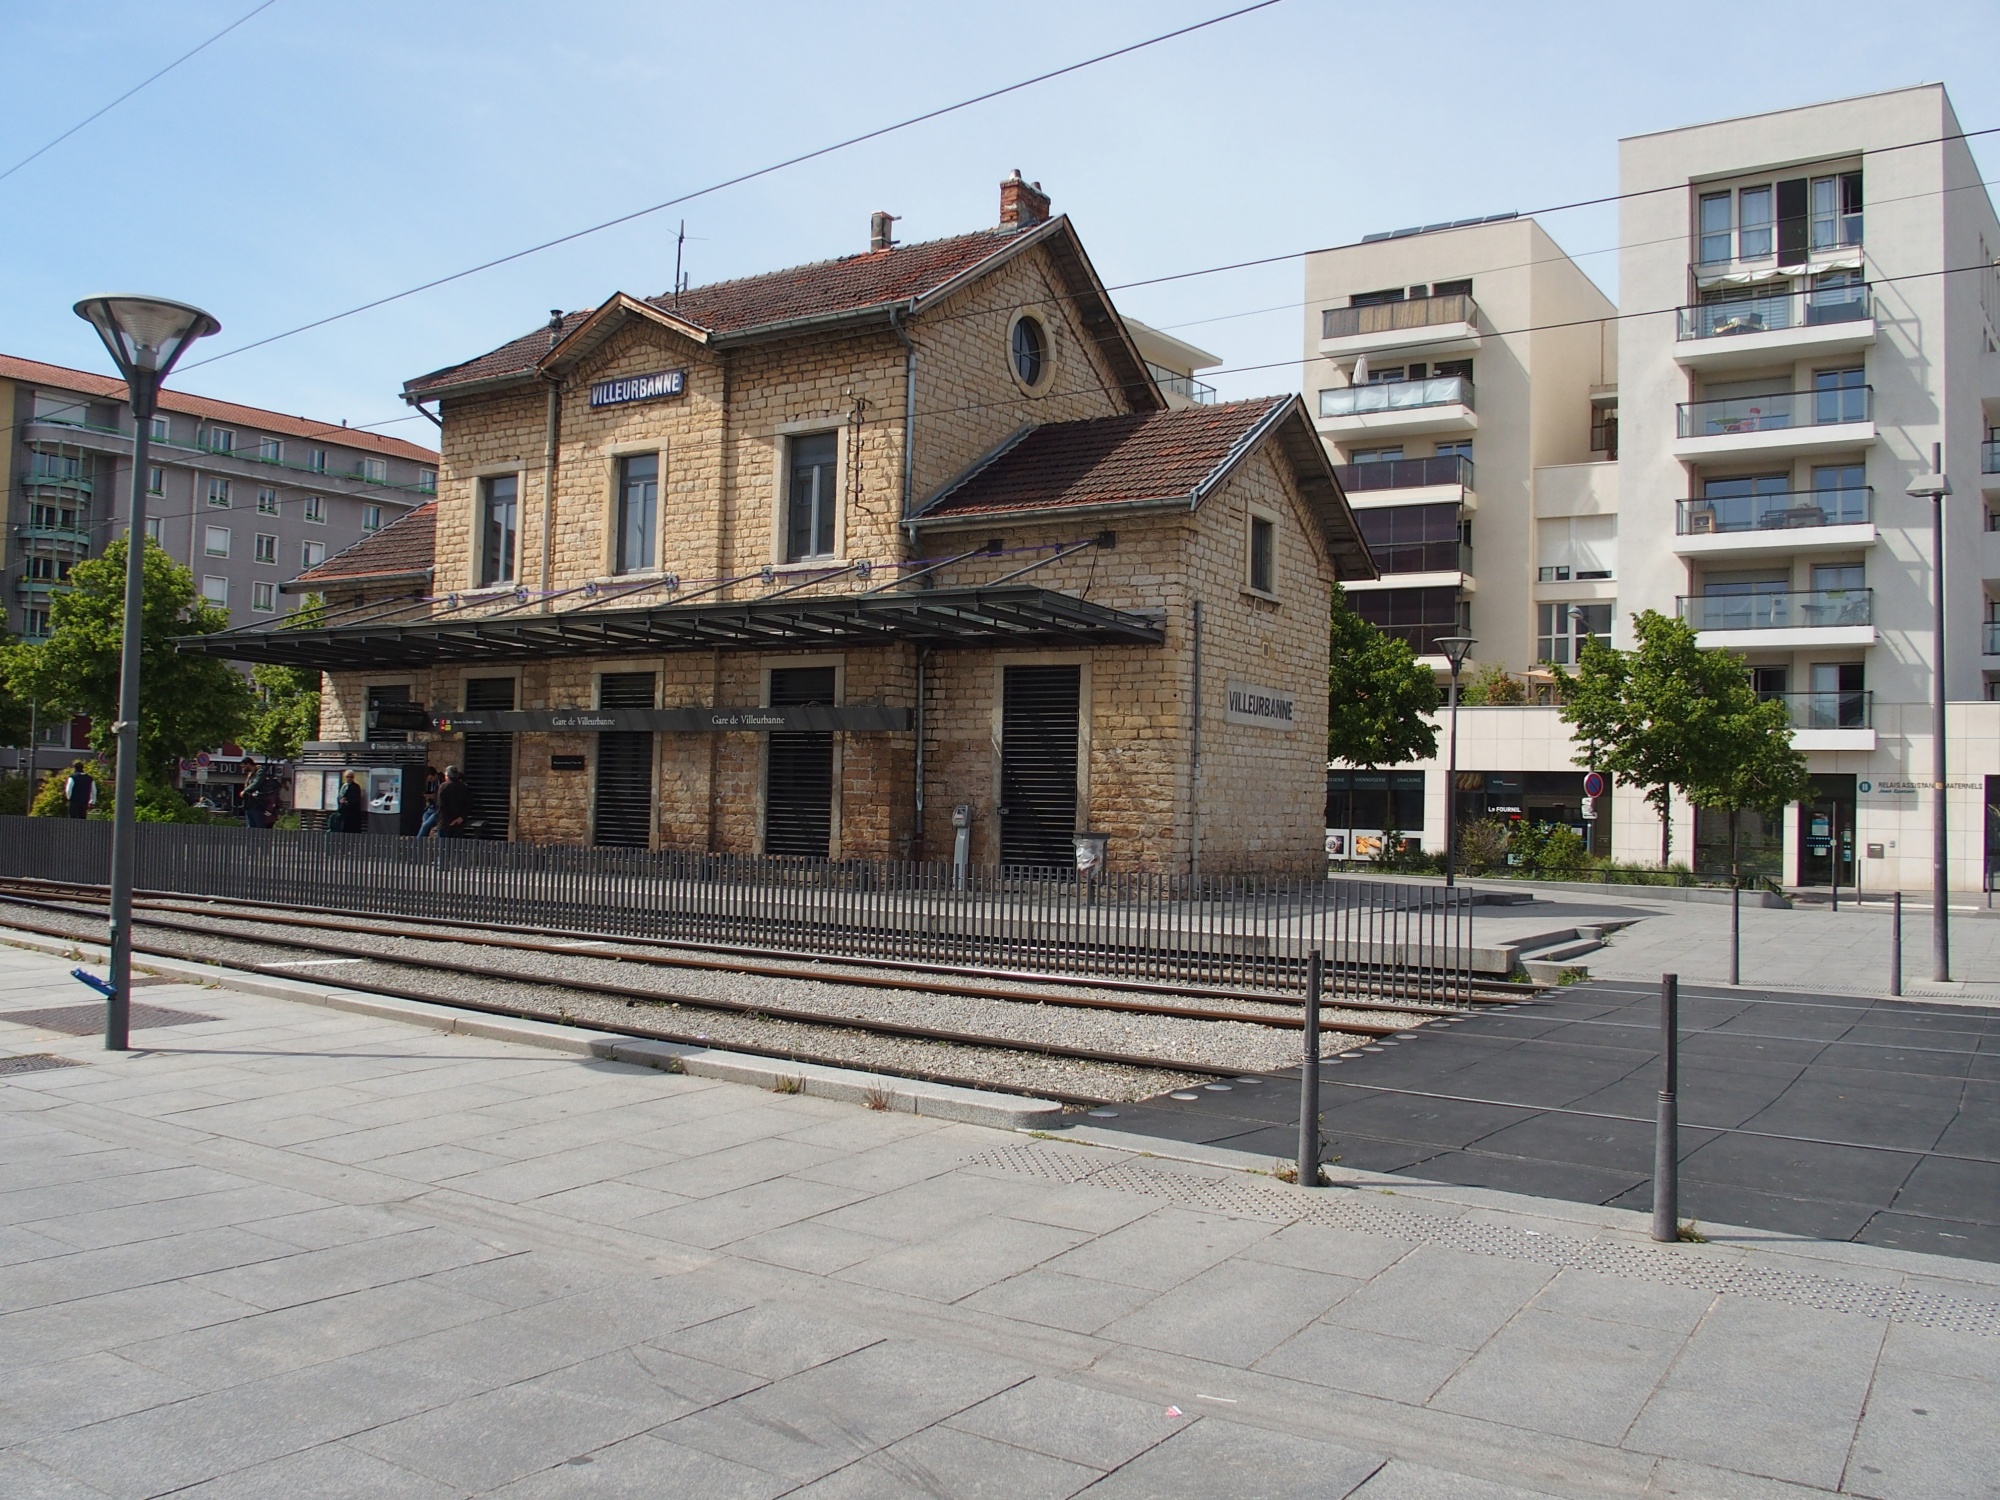 Gare de Villeurbanne